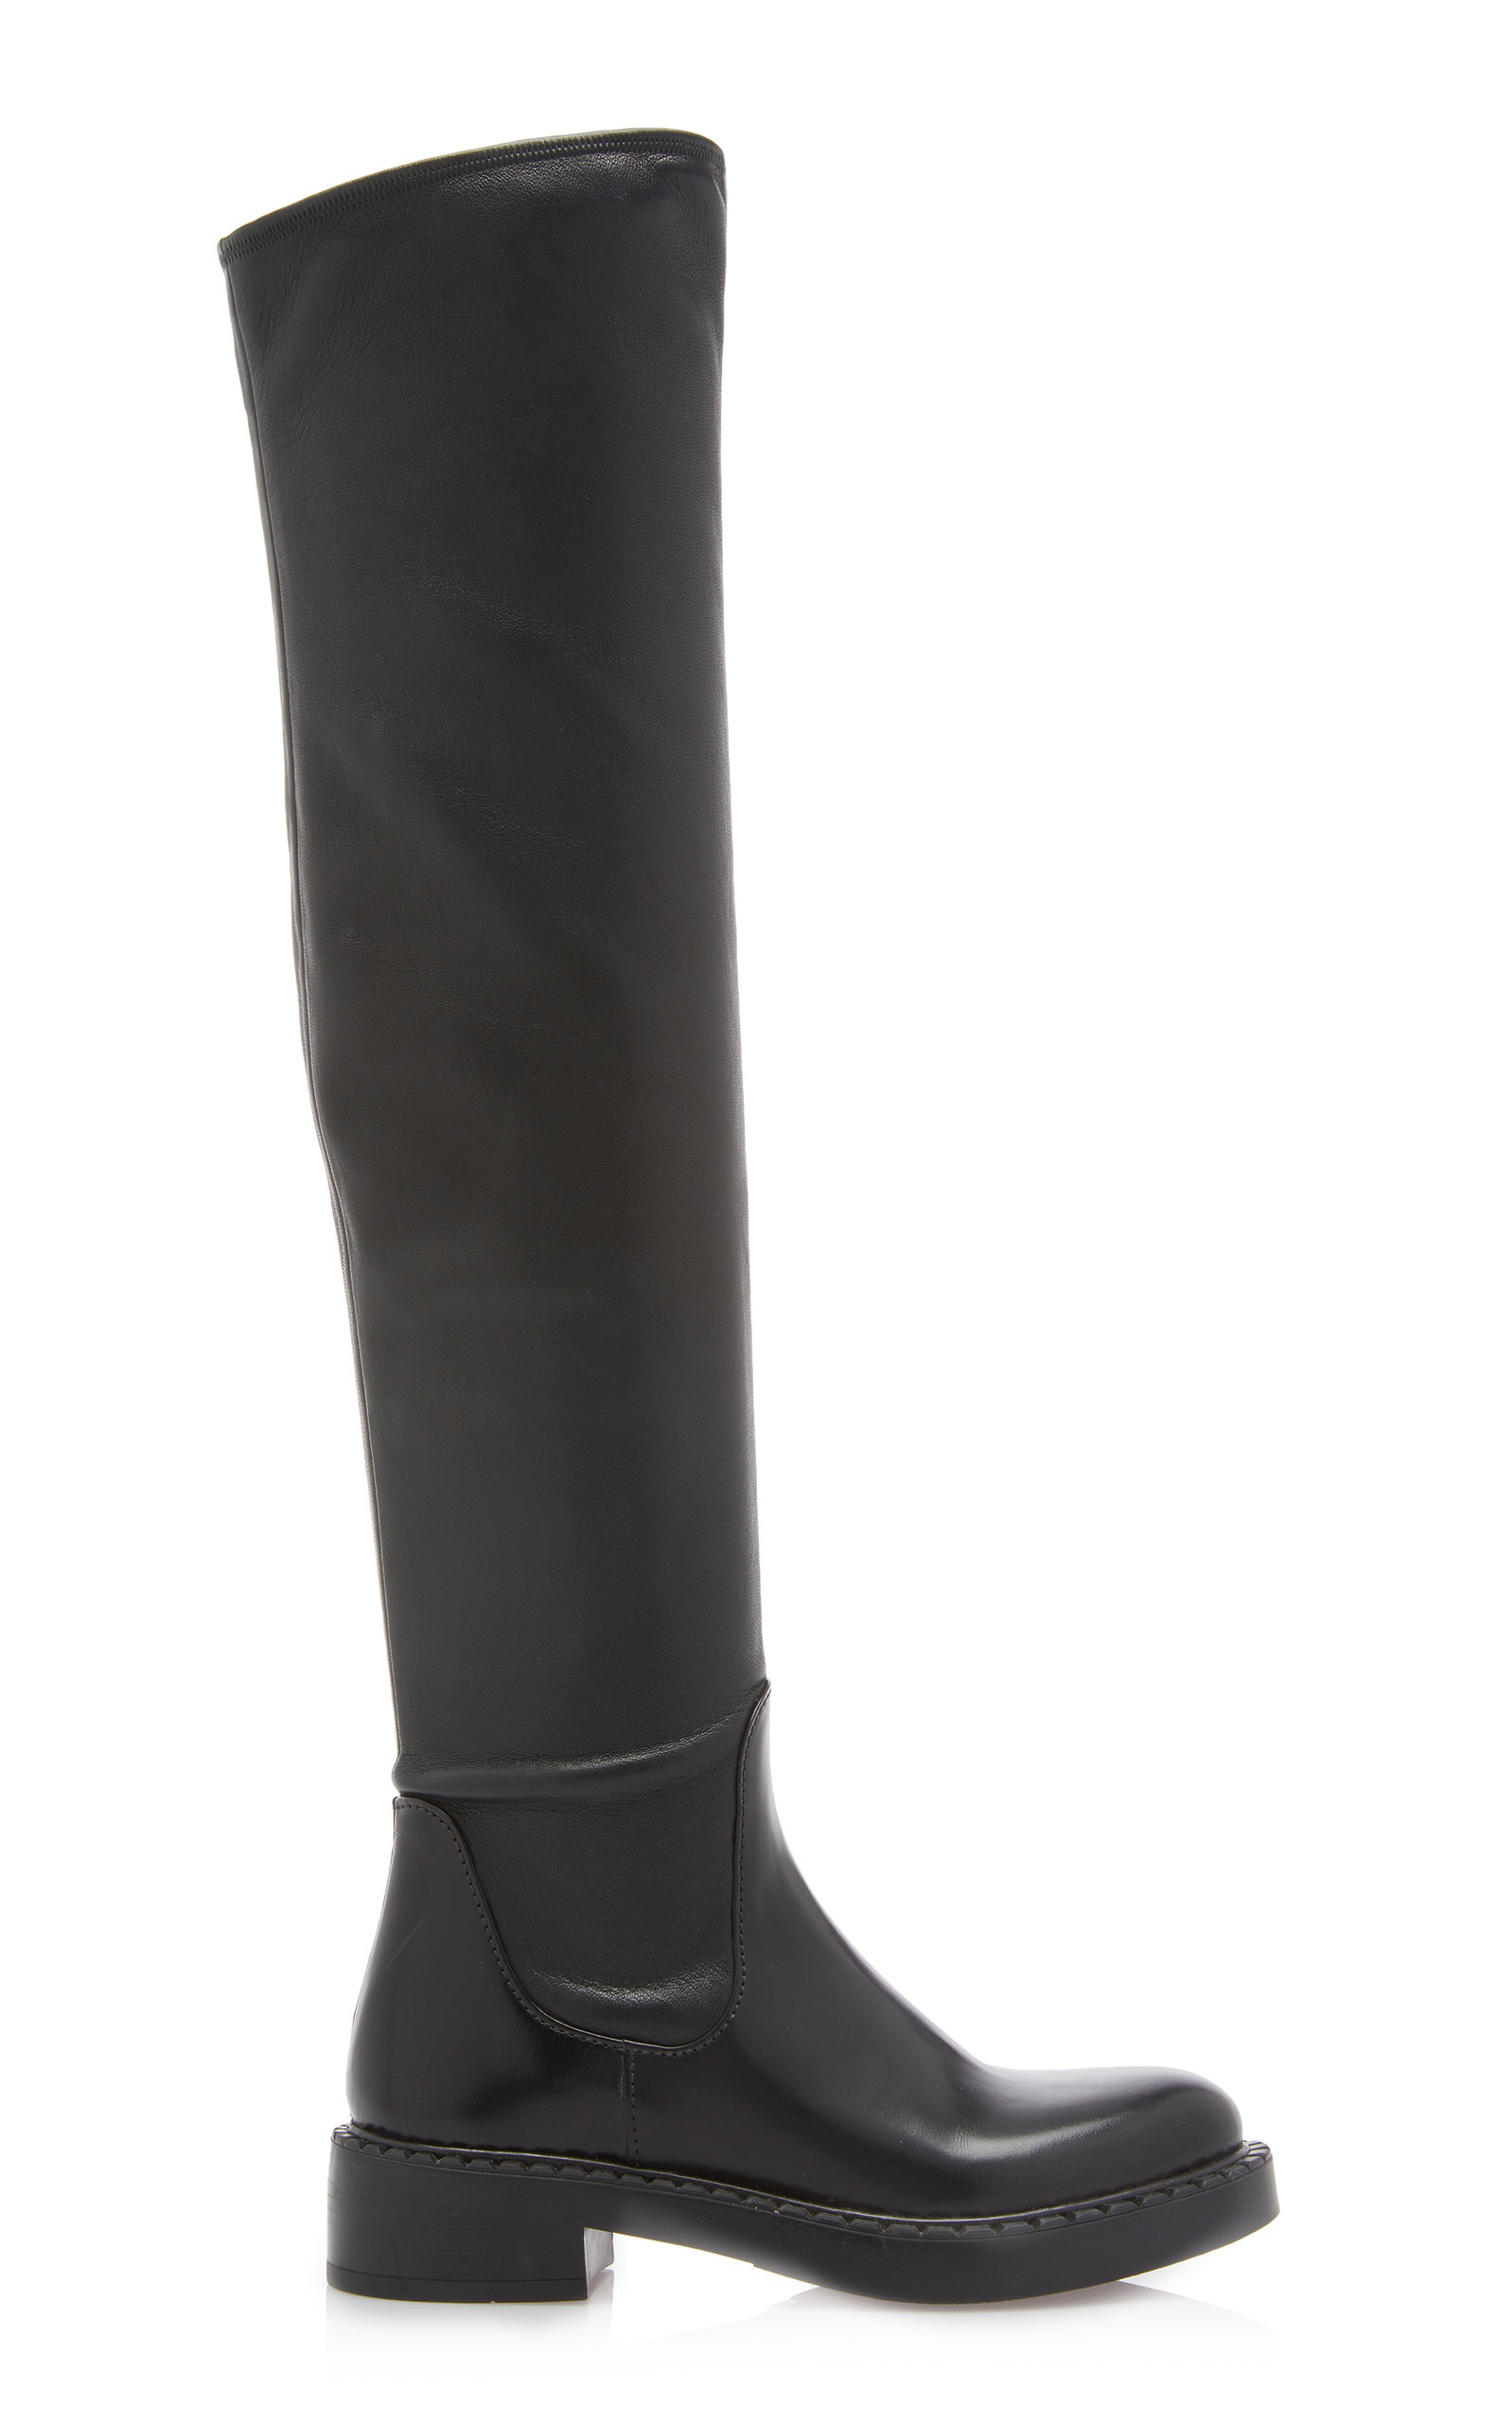 Prada - Women's Stretch-Leather Over-The-Knee Boots - Black - Moda Operandi